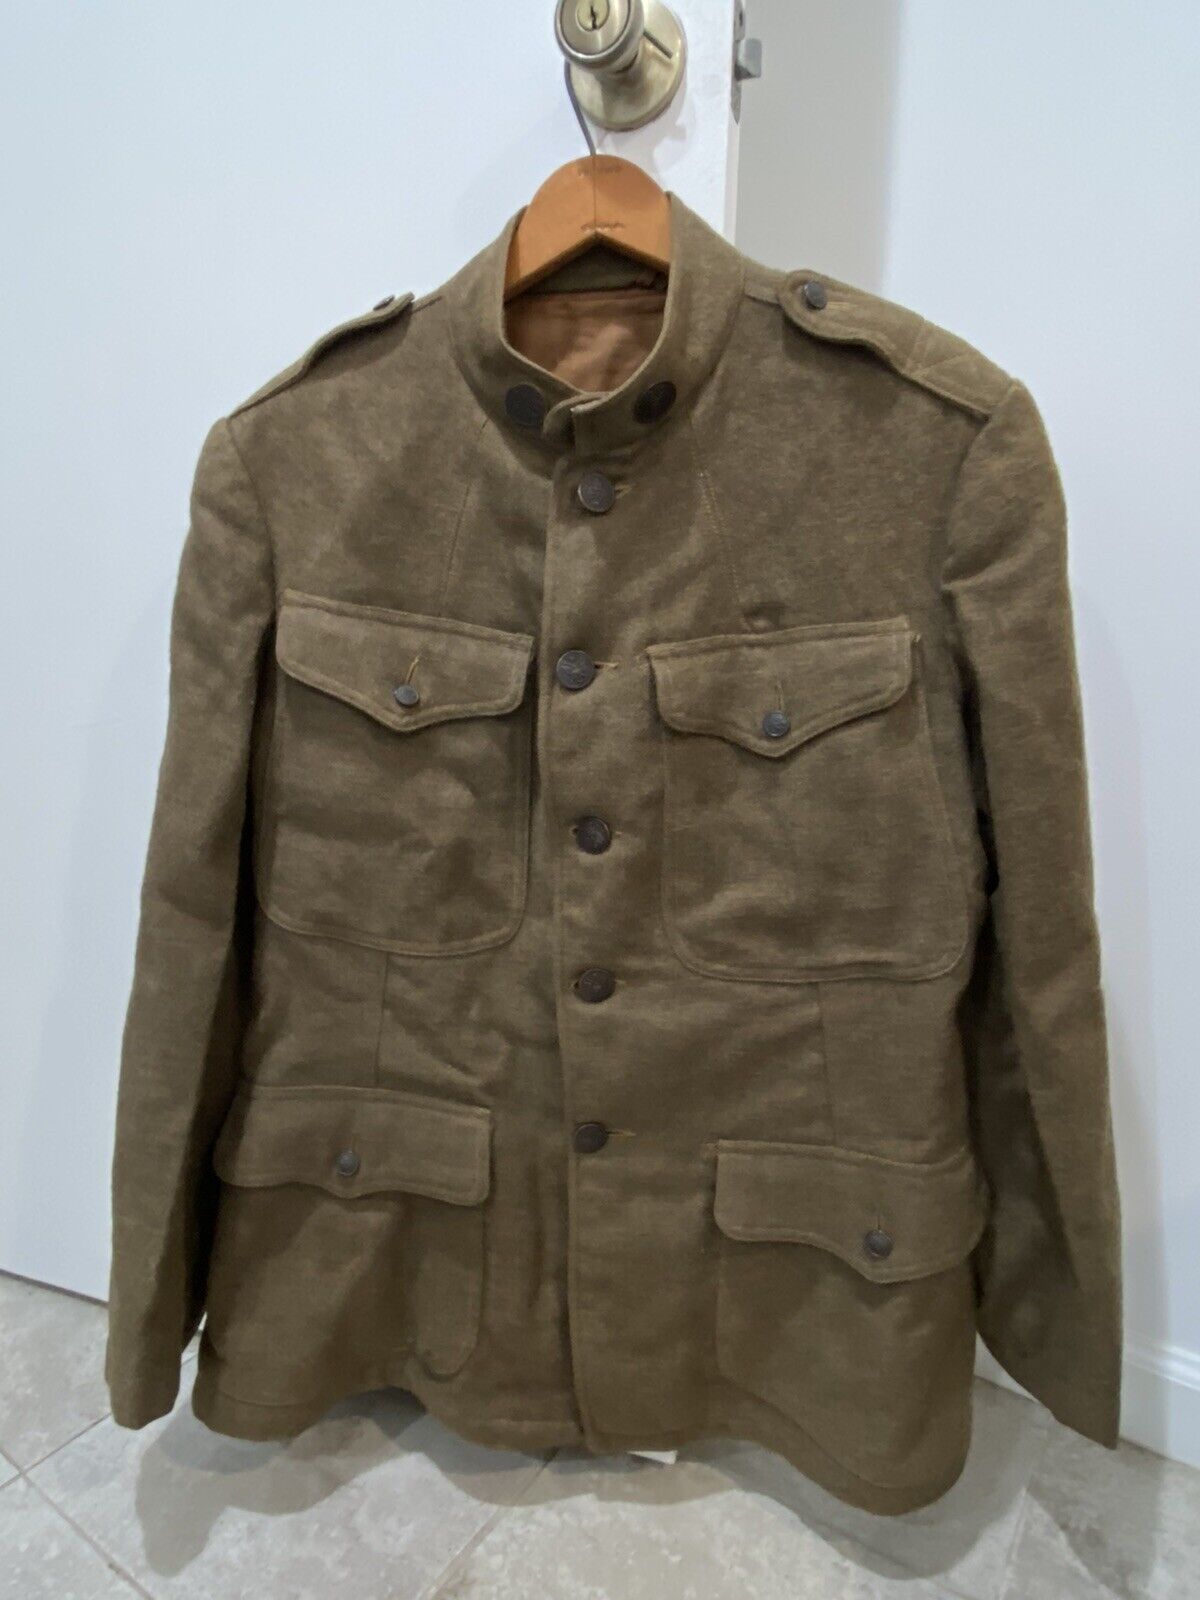 RARE Original WWI U.S. Army Lined Tunic Uniform Jacket Medical ARMY 1917/1918